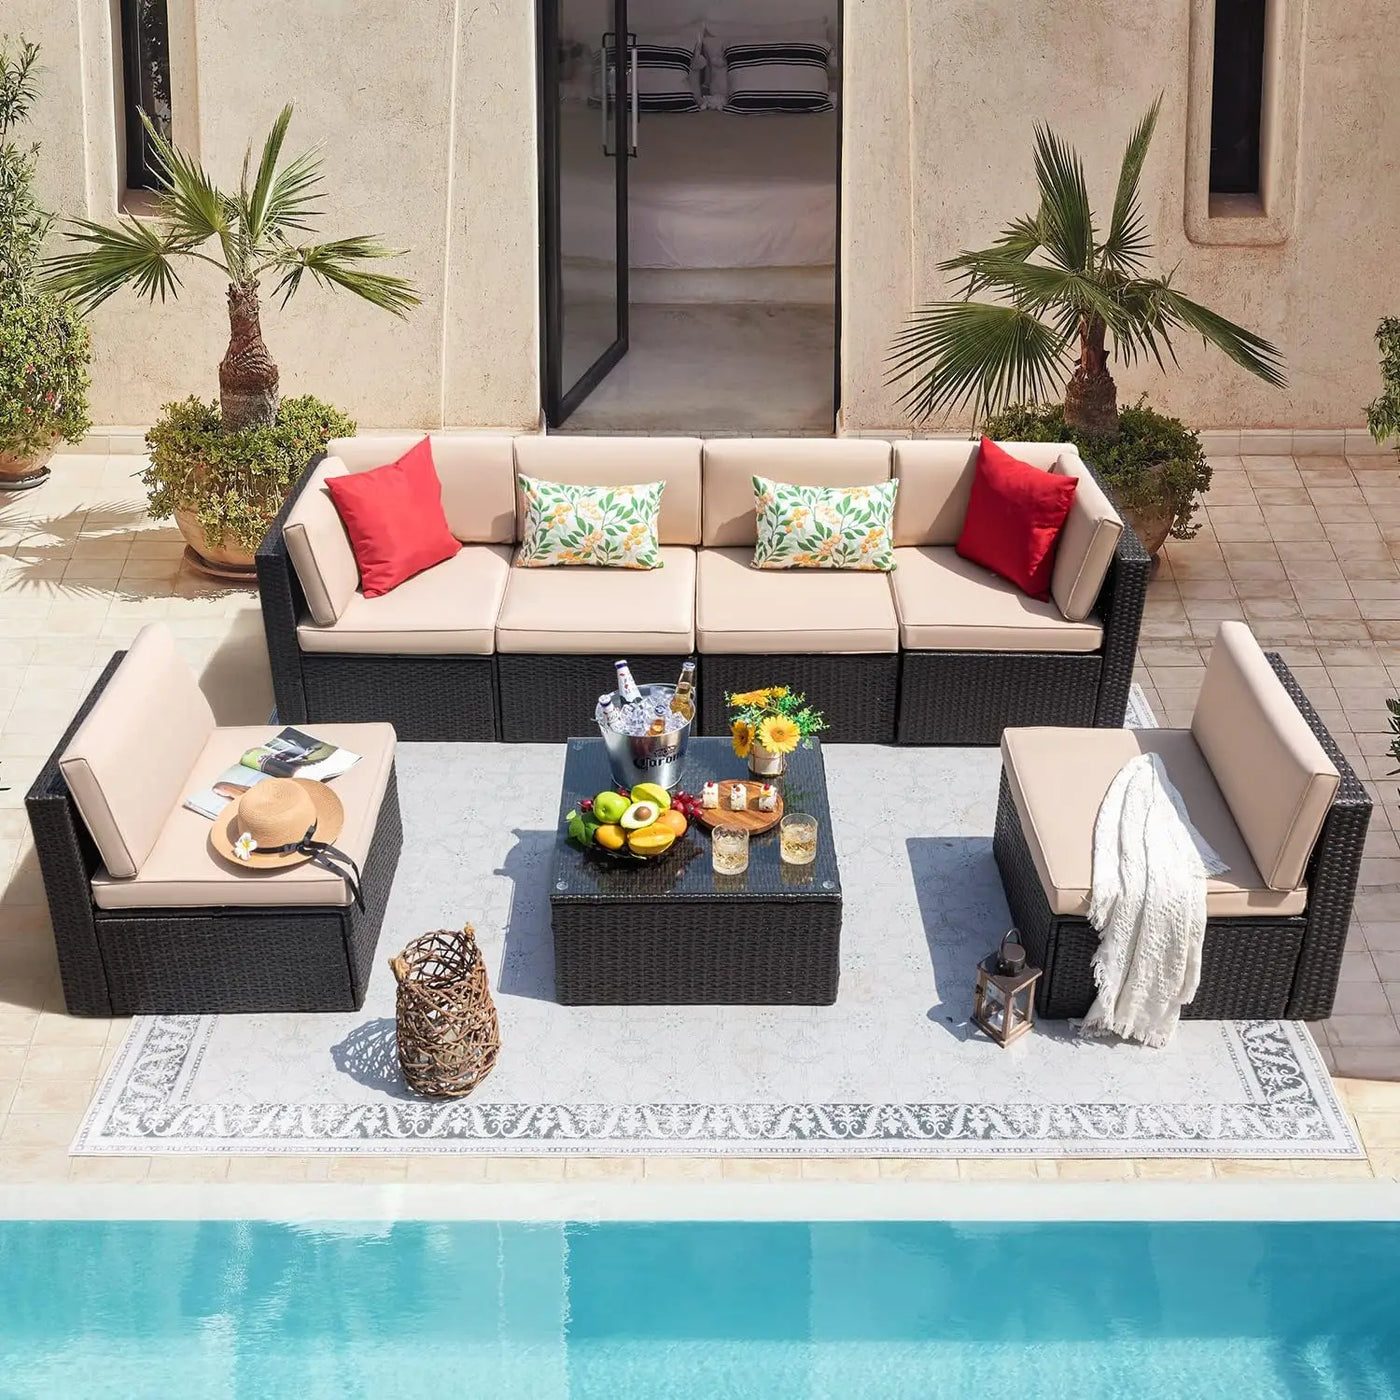 Basso Outdoor 4 Piece Sofa Set | Garden Furniture Set Weaving Wicker Rattan Patio Sets with Cushion Beige